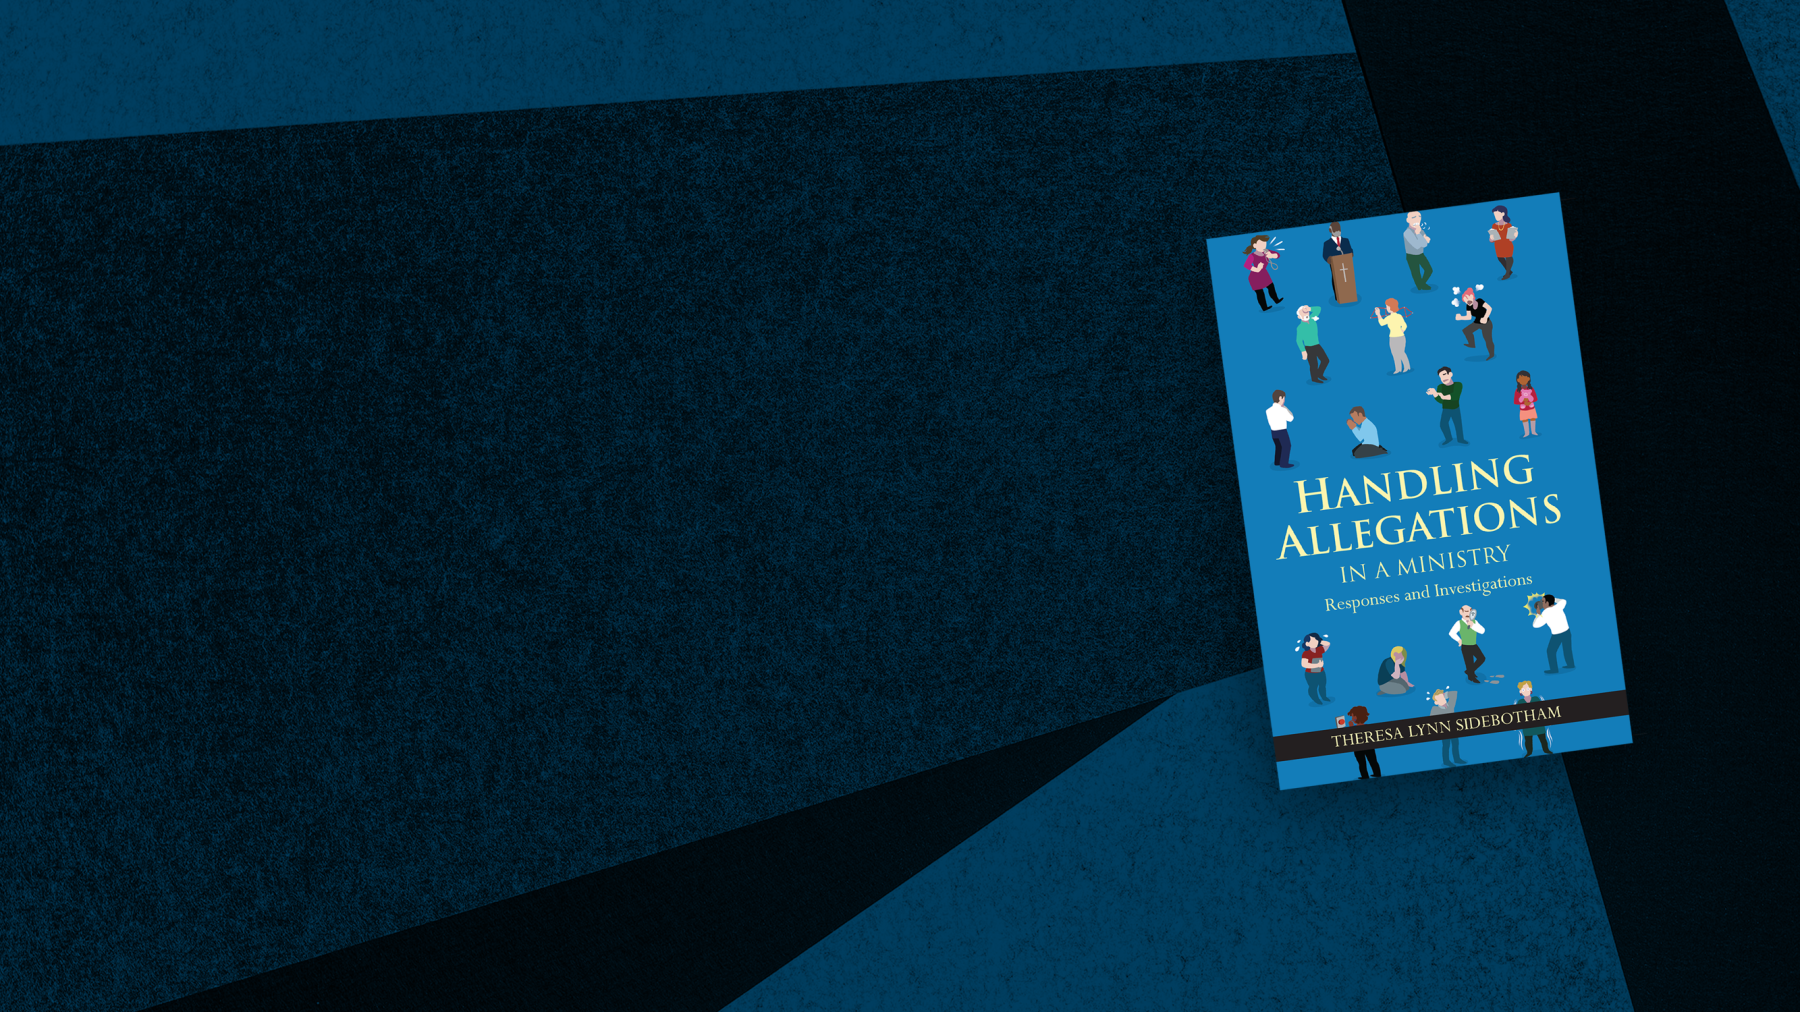 "Handling Allegations" book cover on blue background